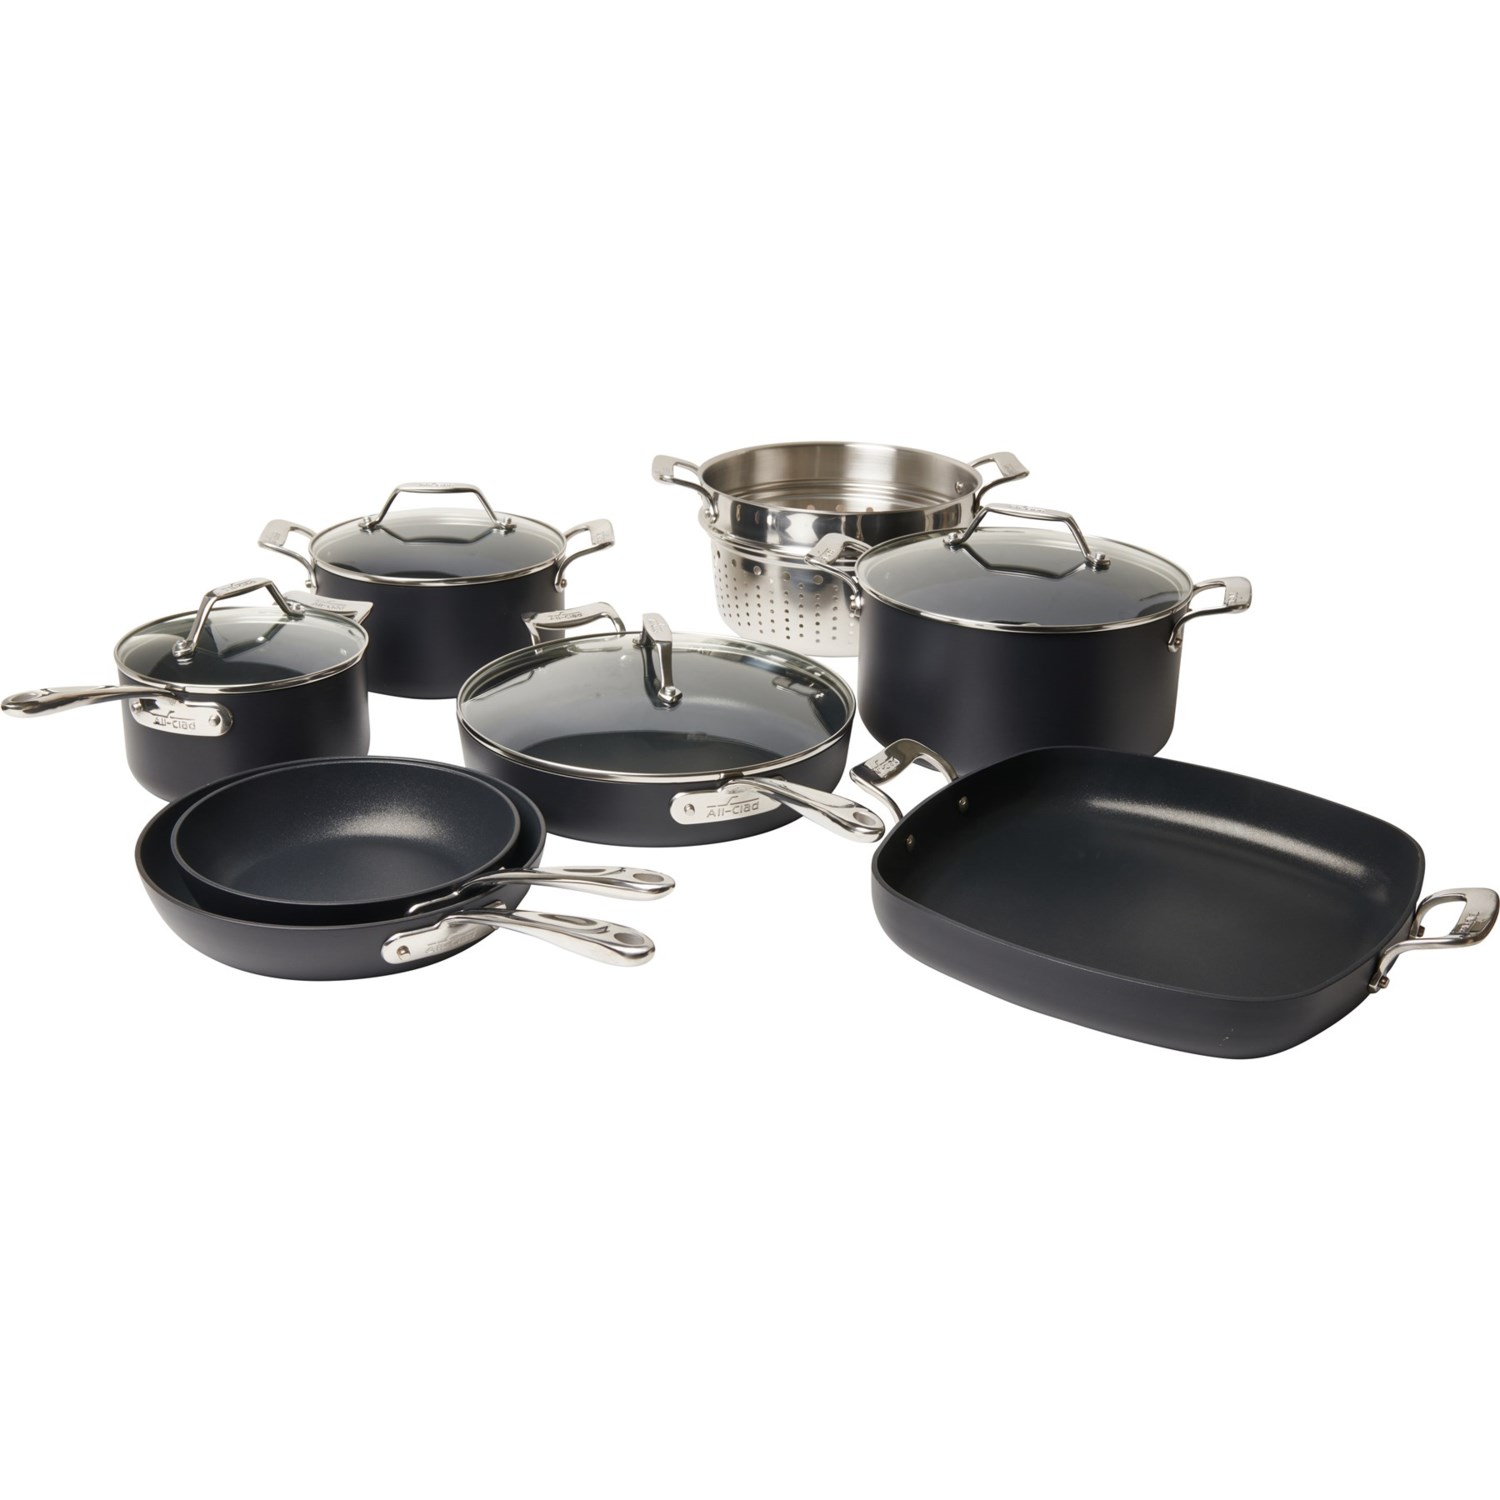 All-Clad Essentials Nonstick Cookware set, 10-Piece, Grey